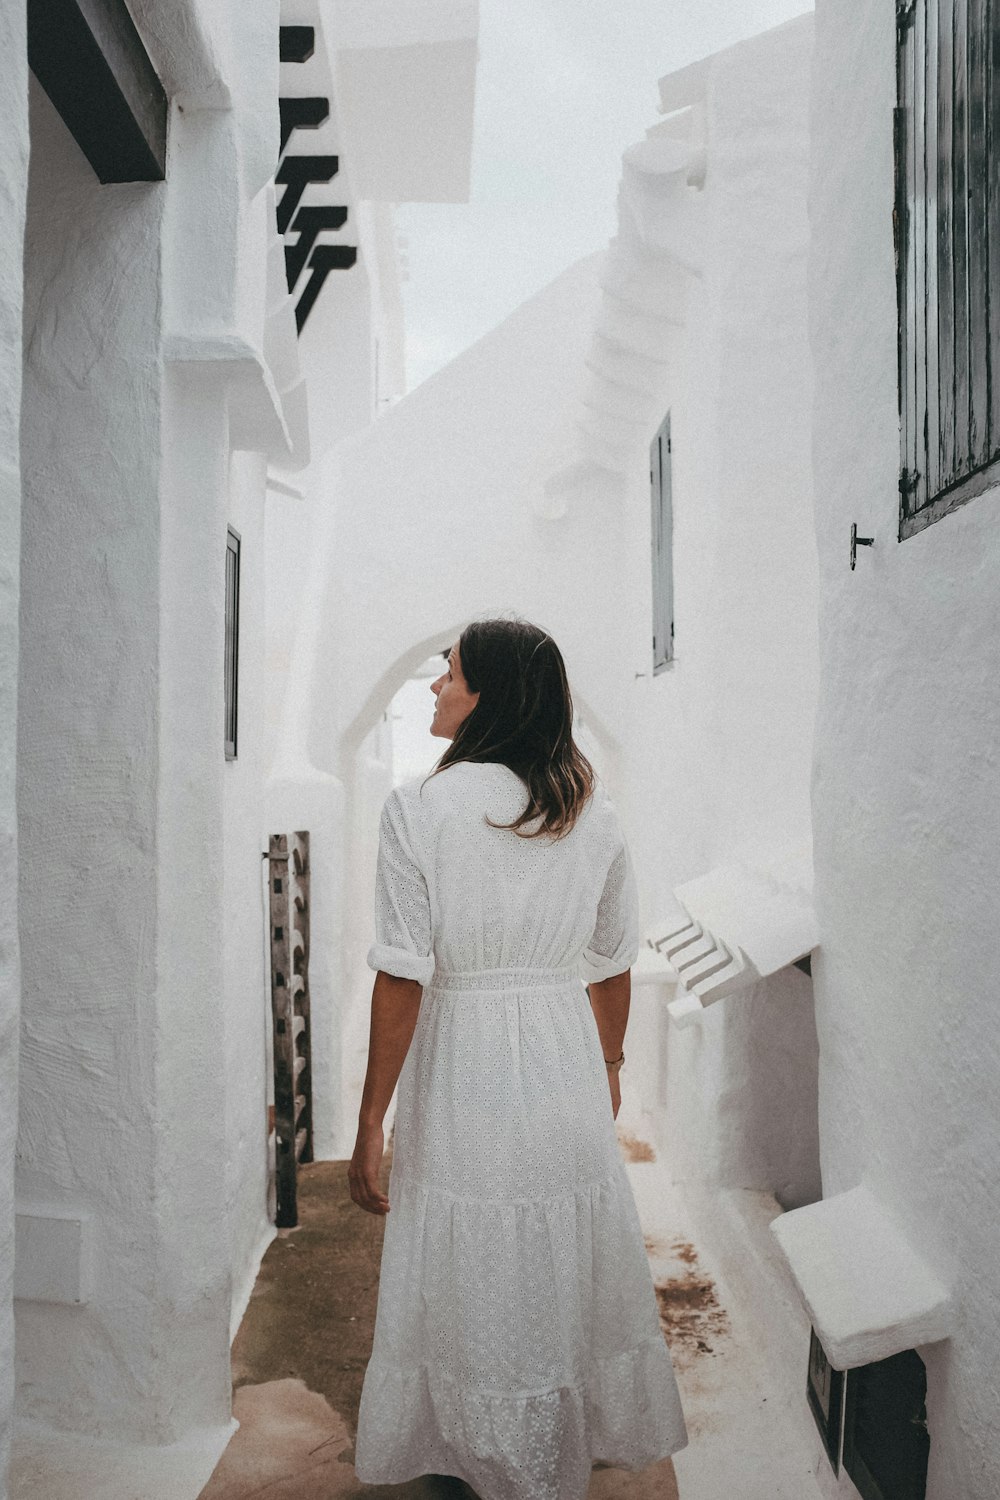 a woman in a white dress walking down a narrow alley way